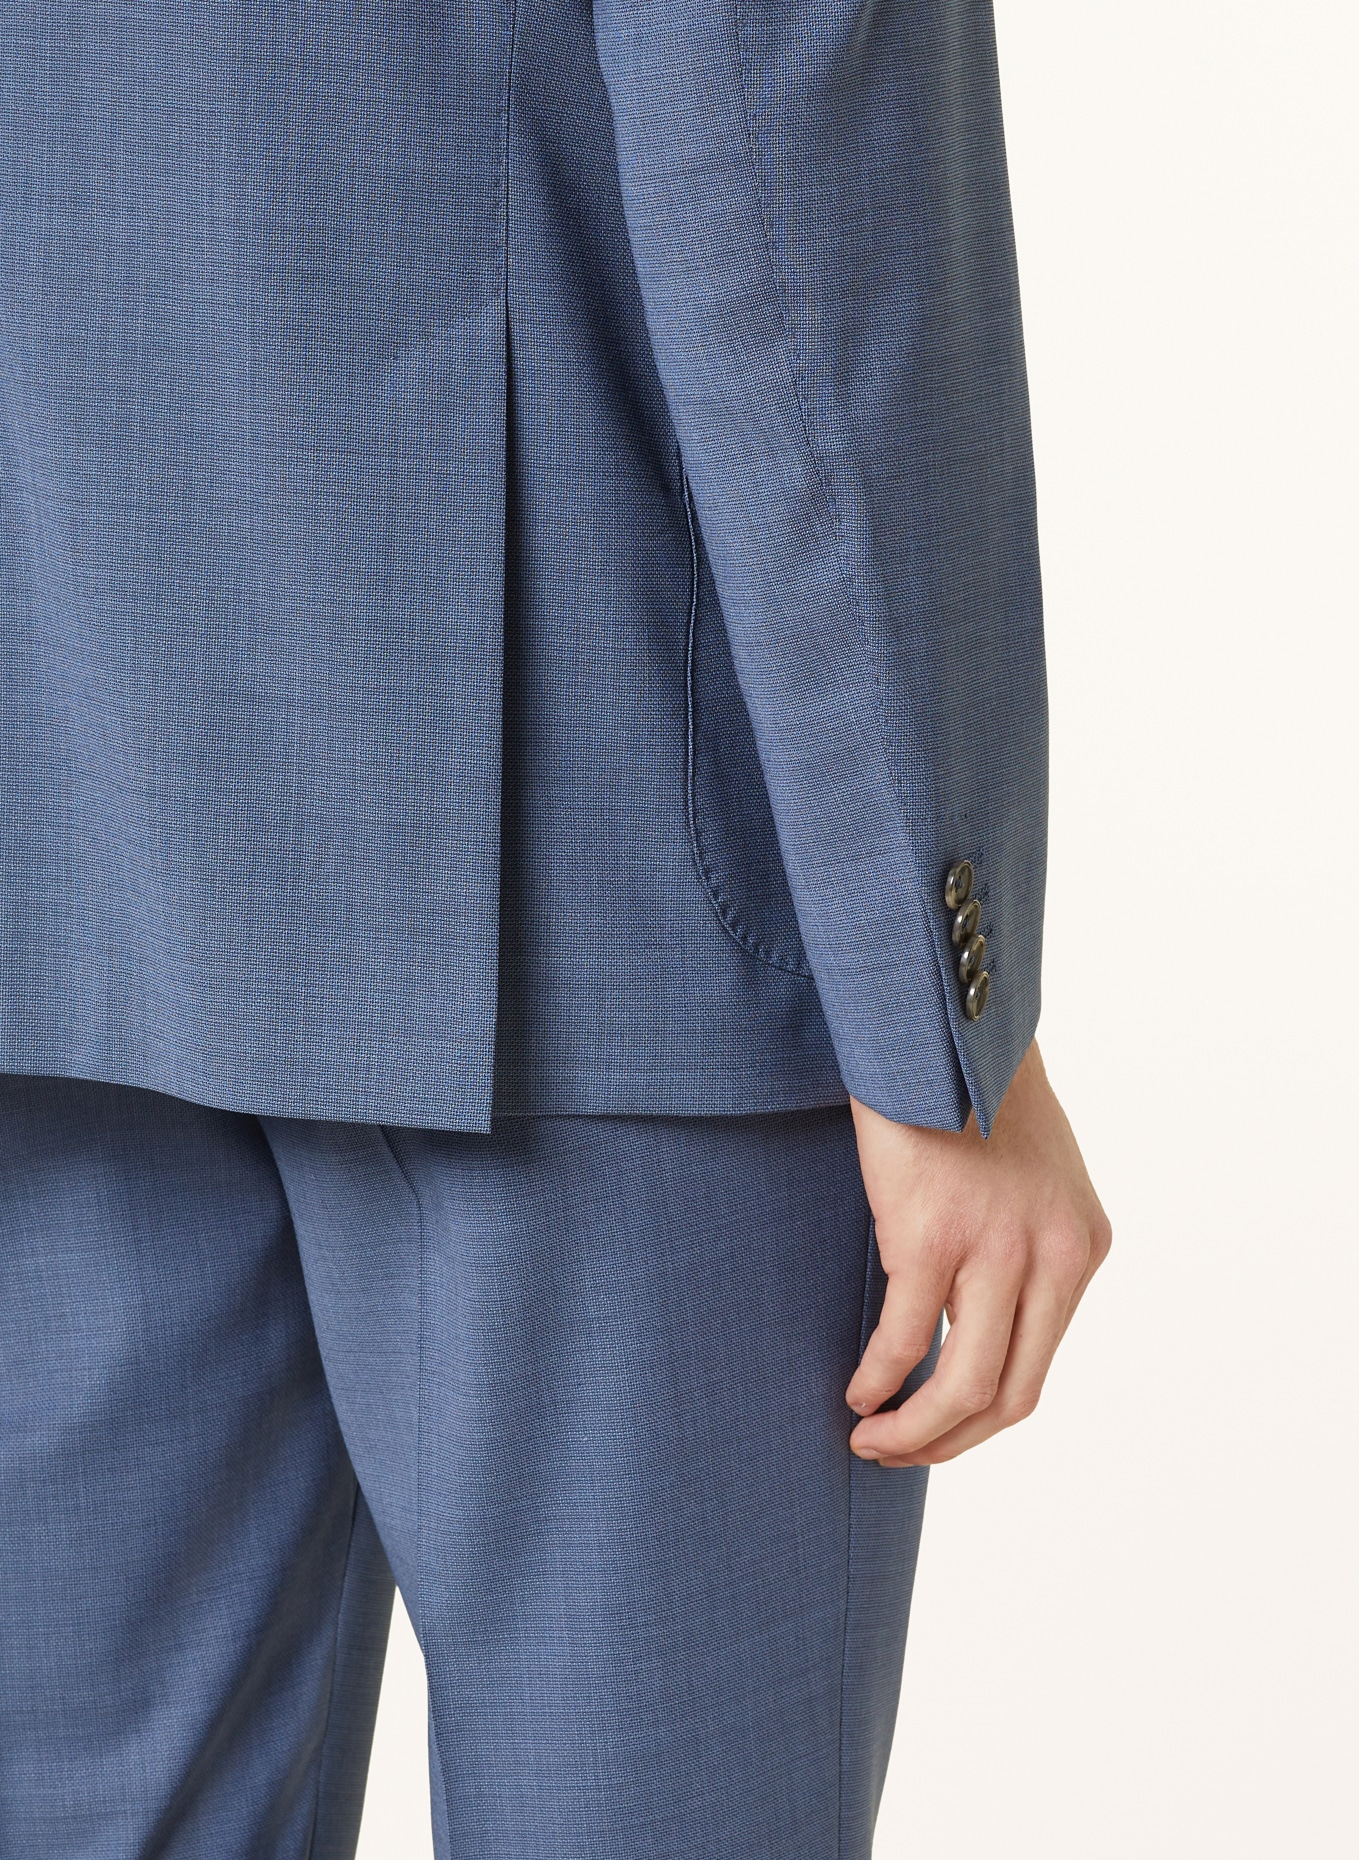 EDUARD DRESSLER Suit jacket SENDRIK regular fit, Color: 036 Hellblau (Image 5)